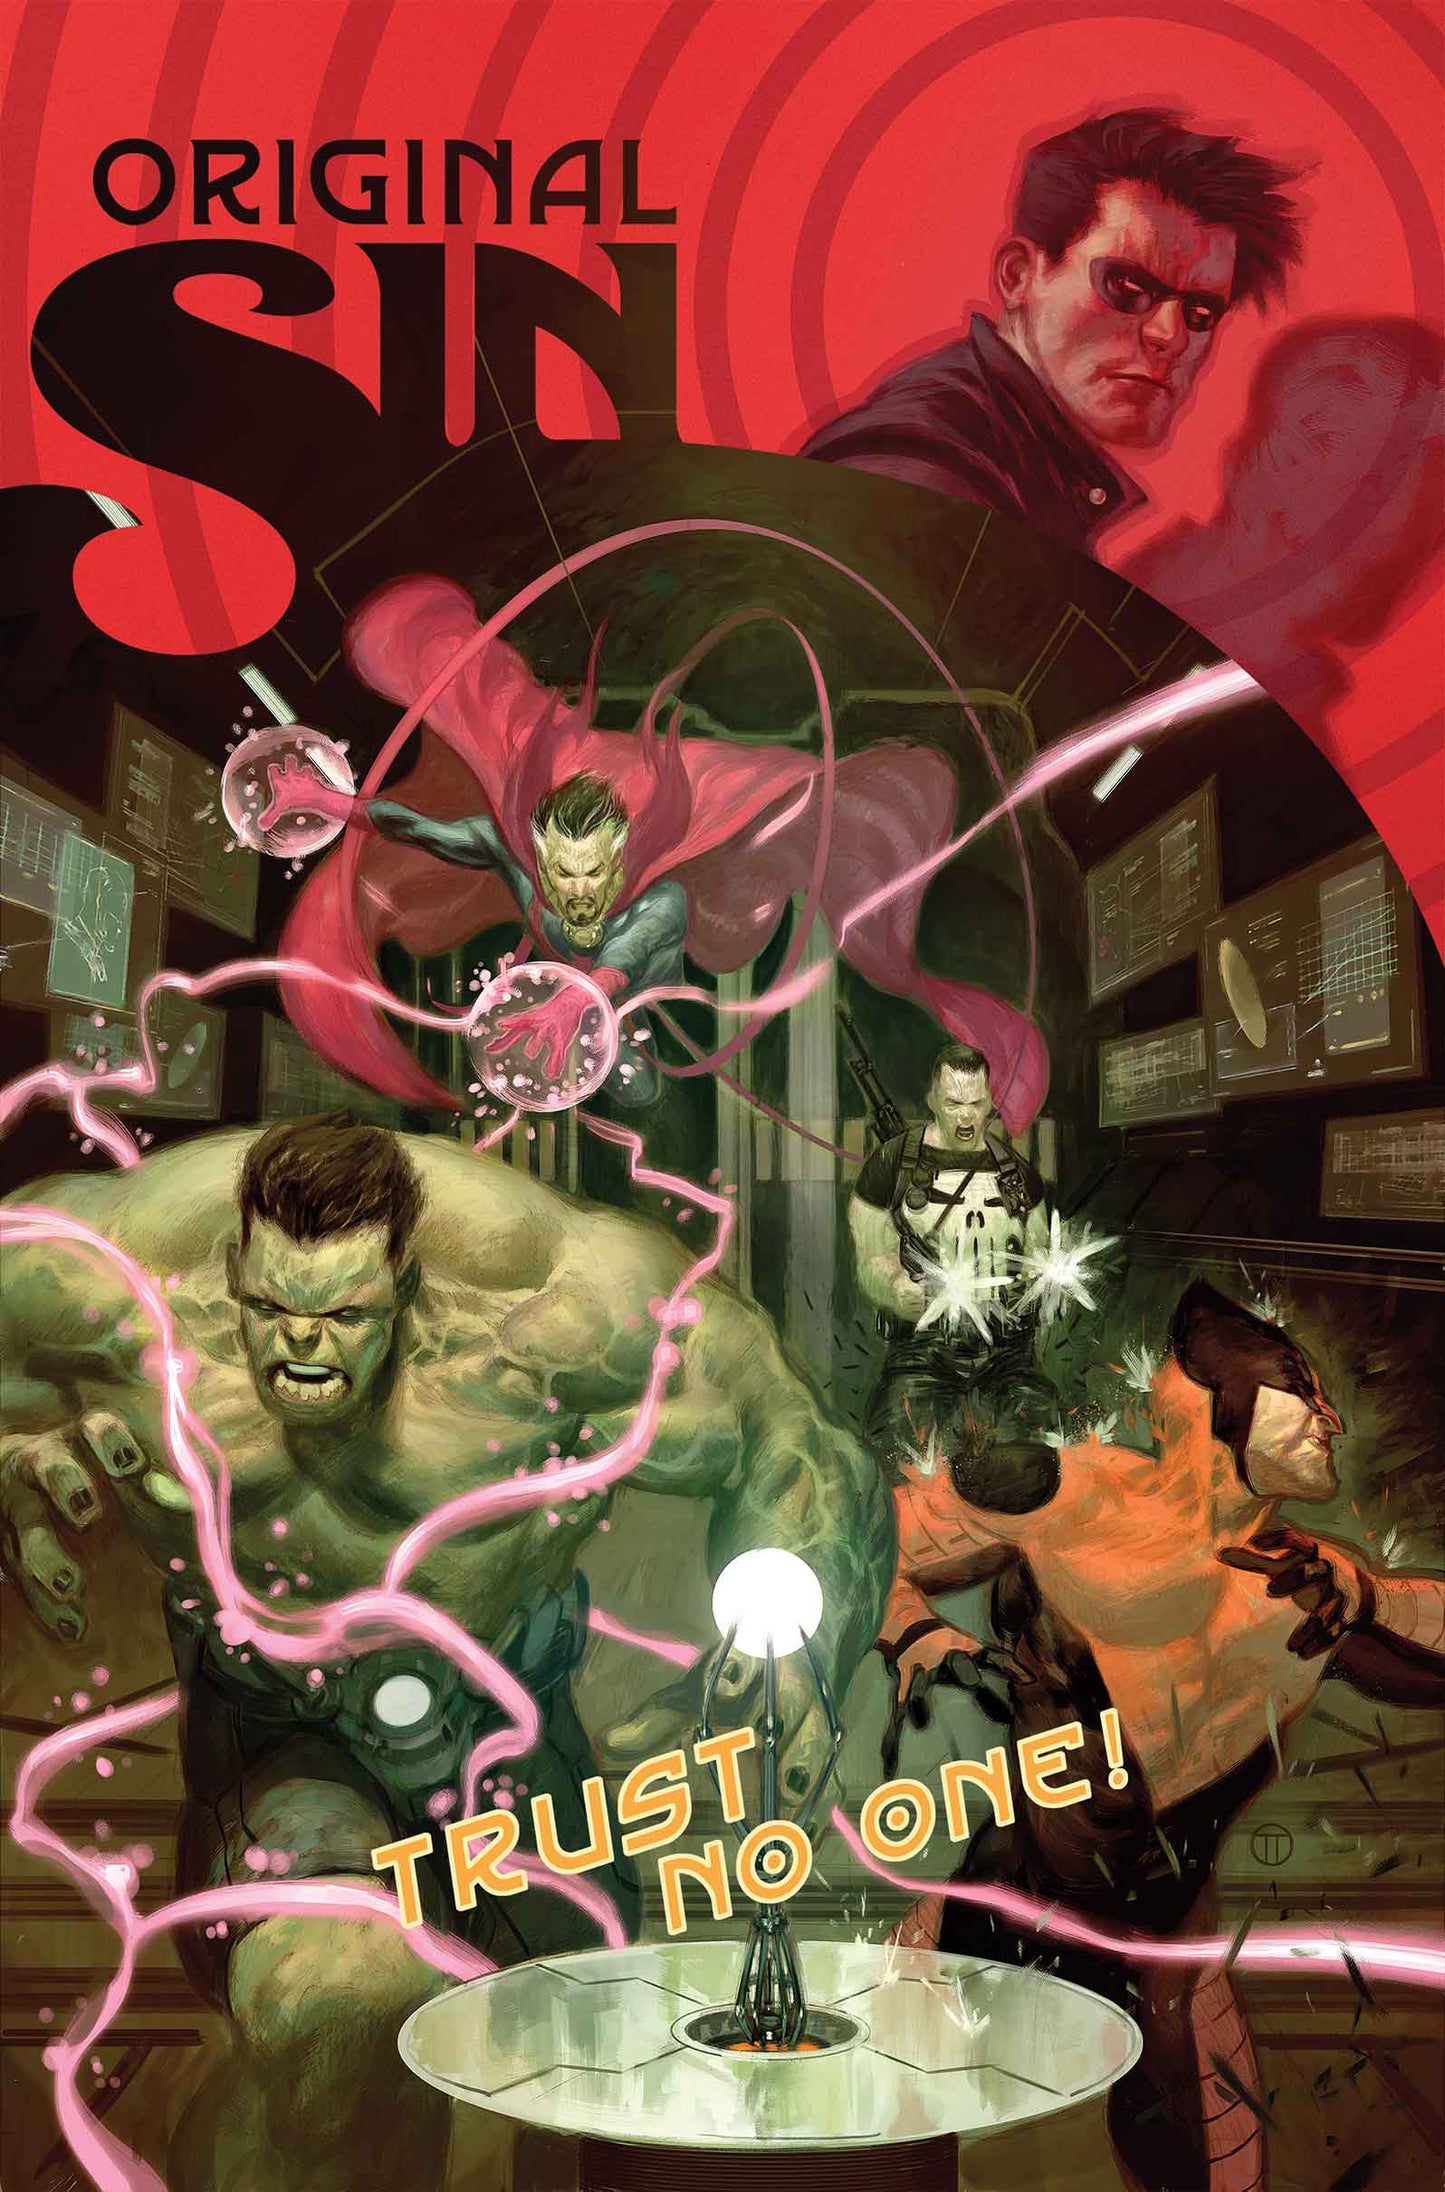 Original Sin #4 A (Of 8) Marvel 2014 Jason Aaron Julian Totino Tedesco